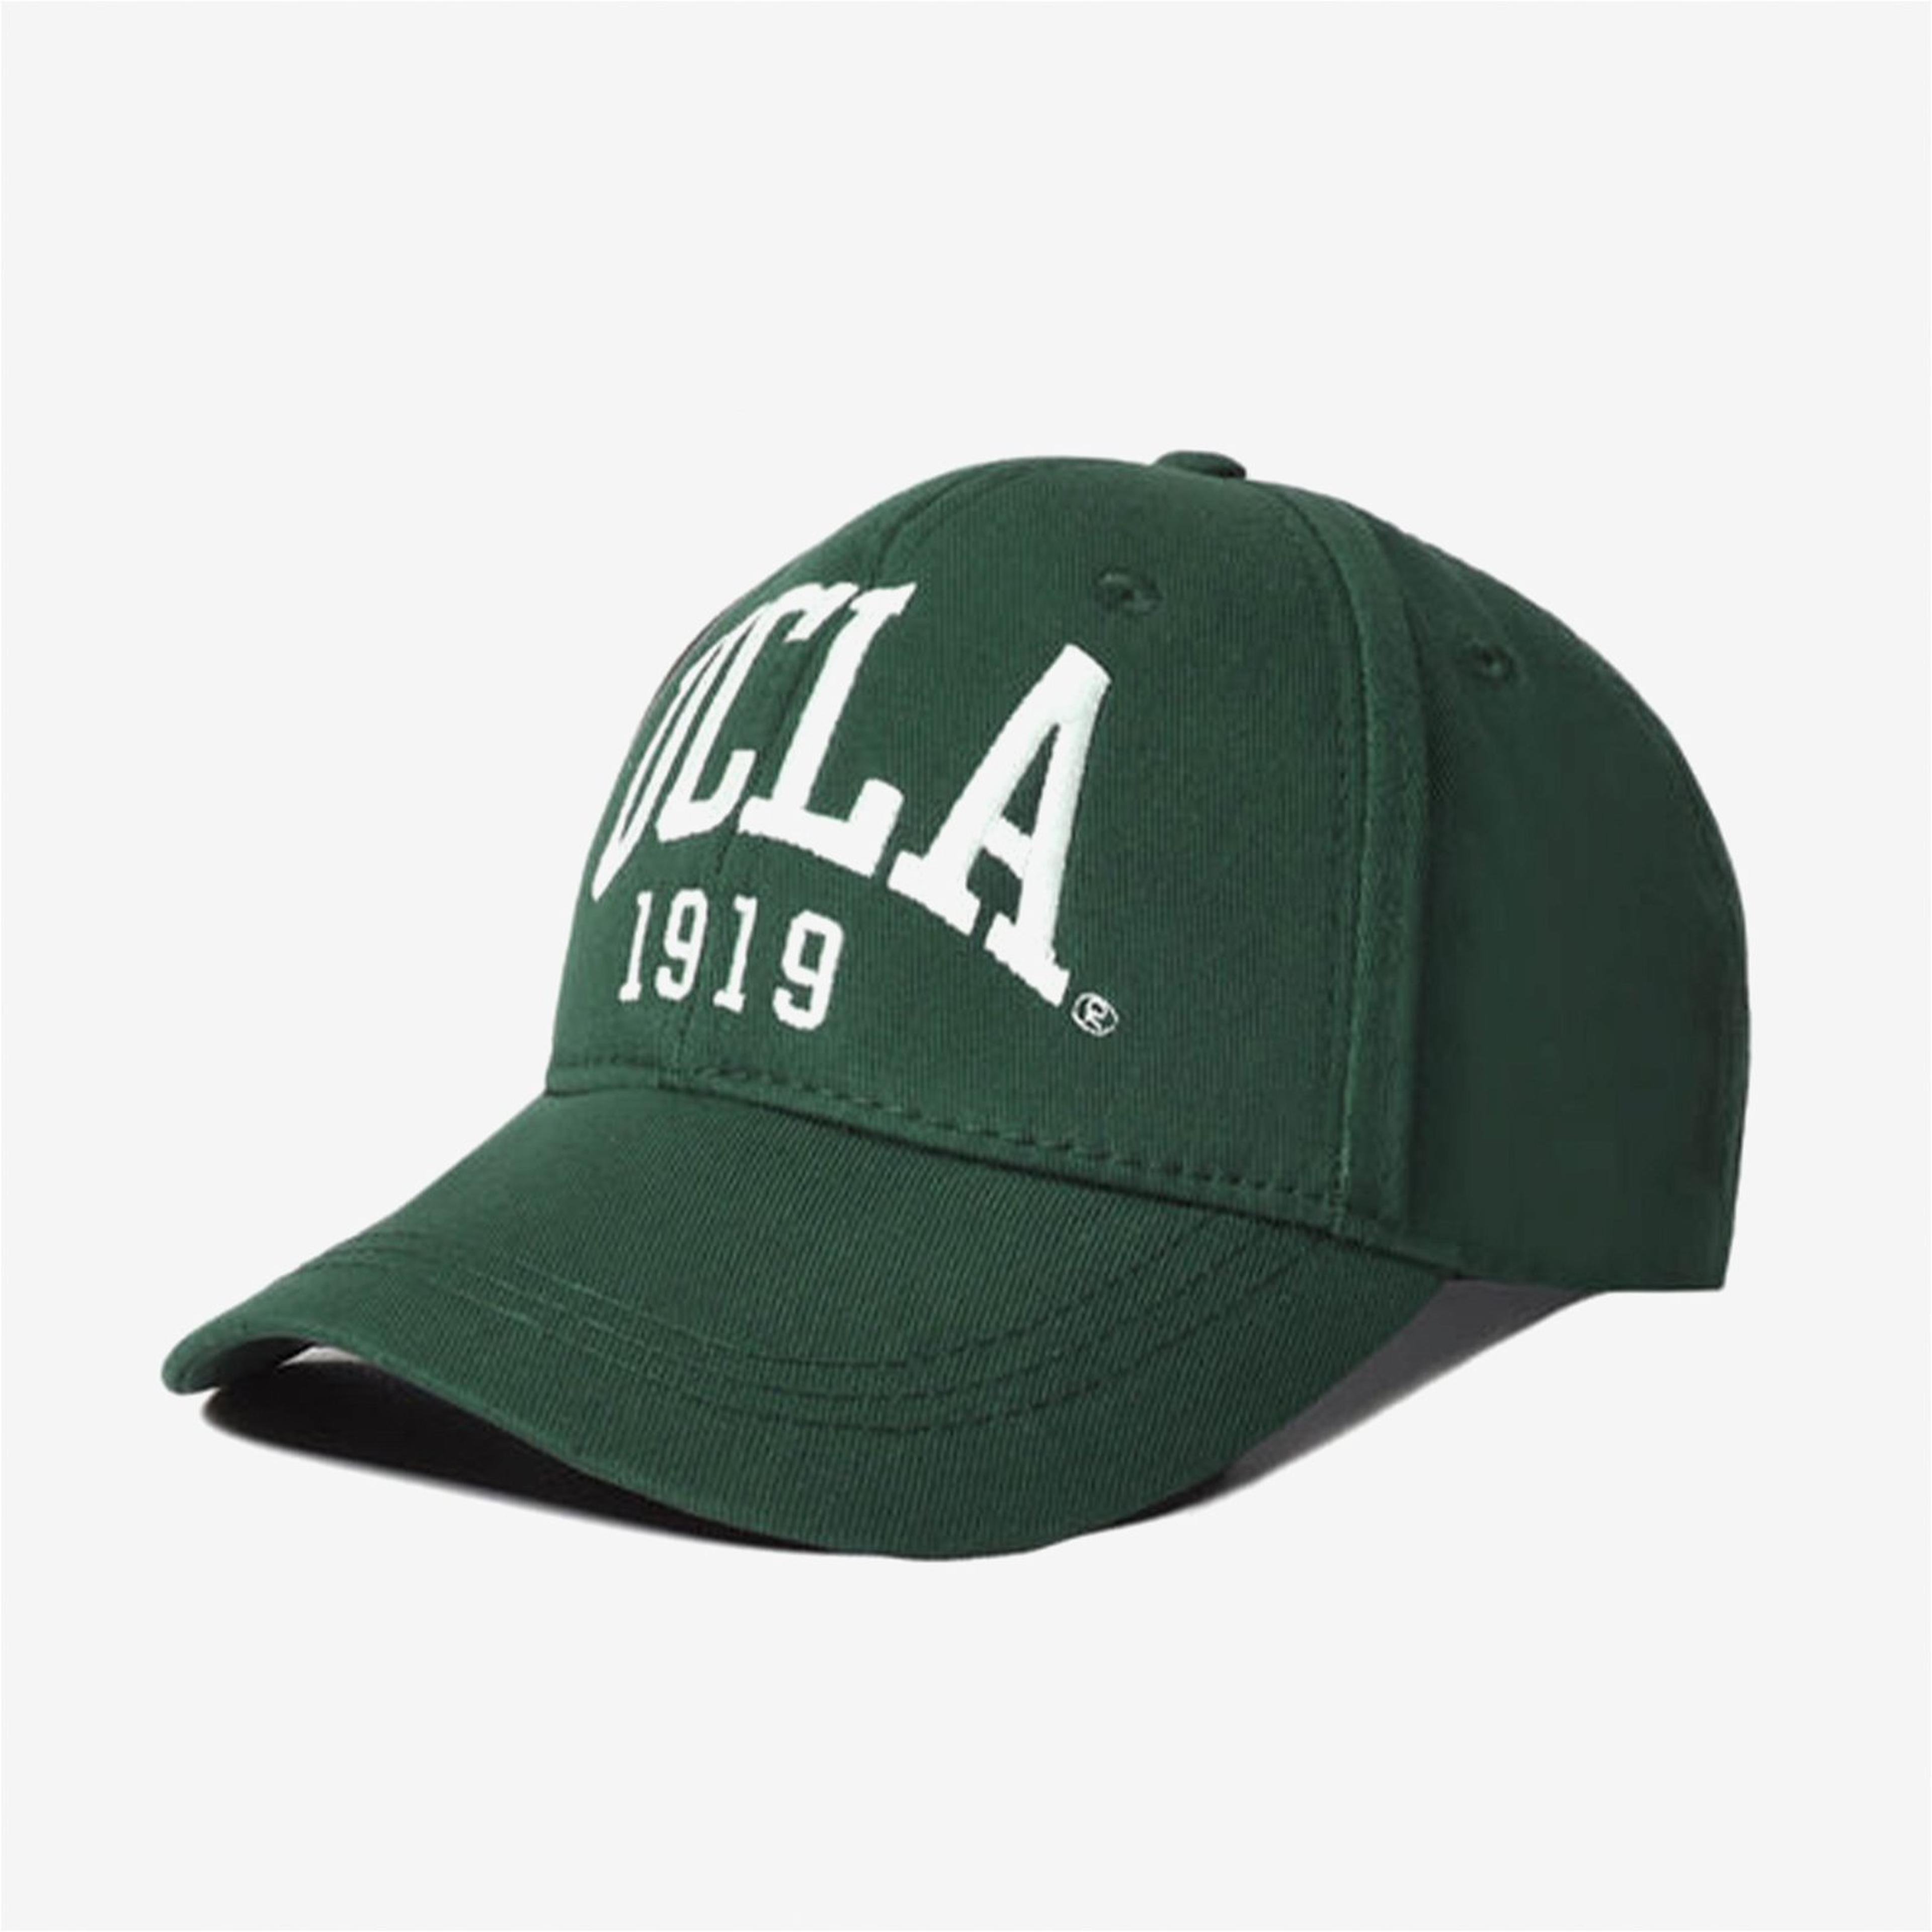 UCLA Ballard Unisex Yeşil Şapka